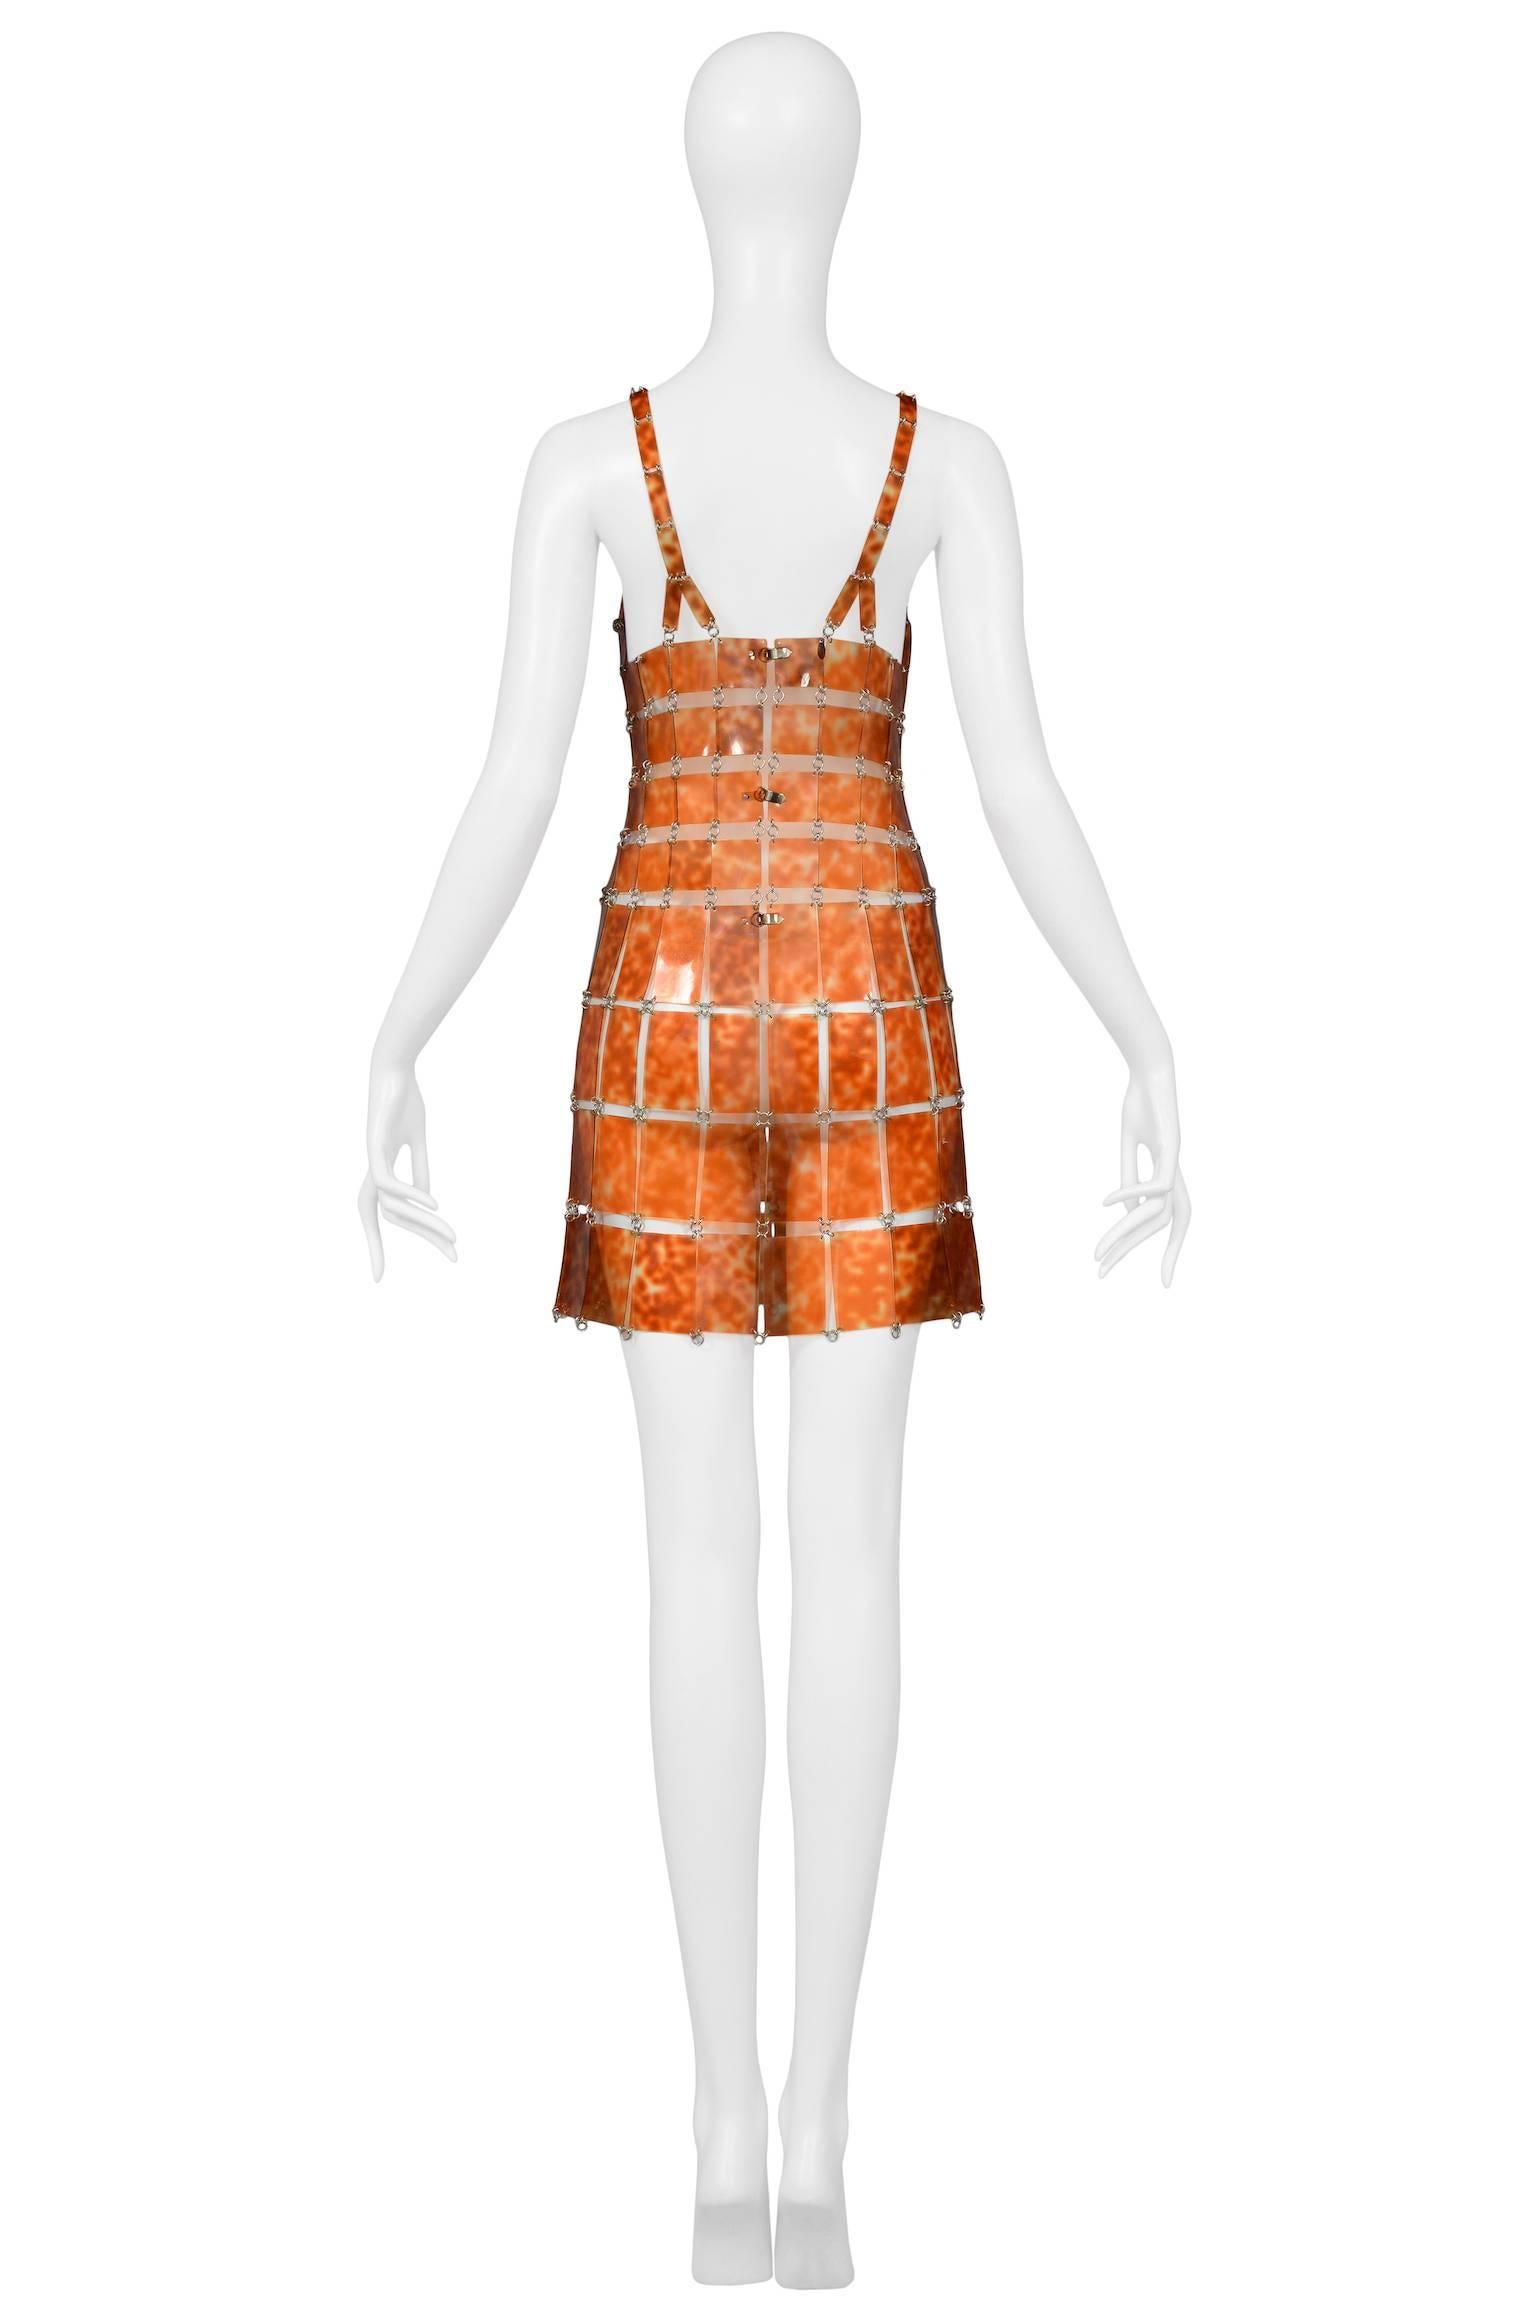 paco rabanne metal dress 1960s